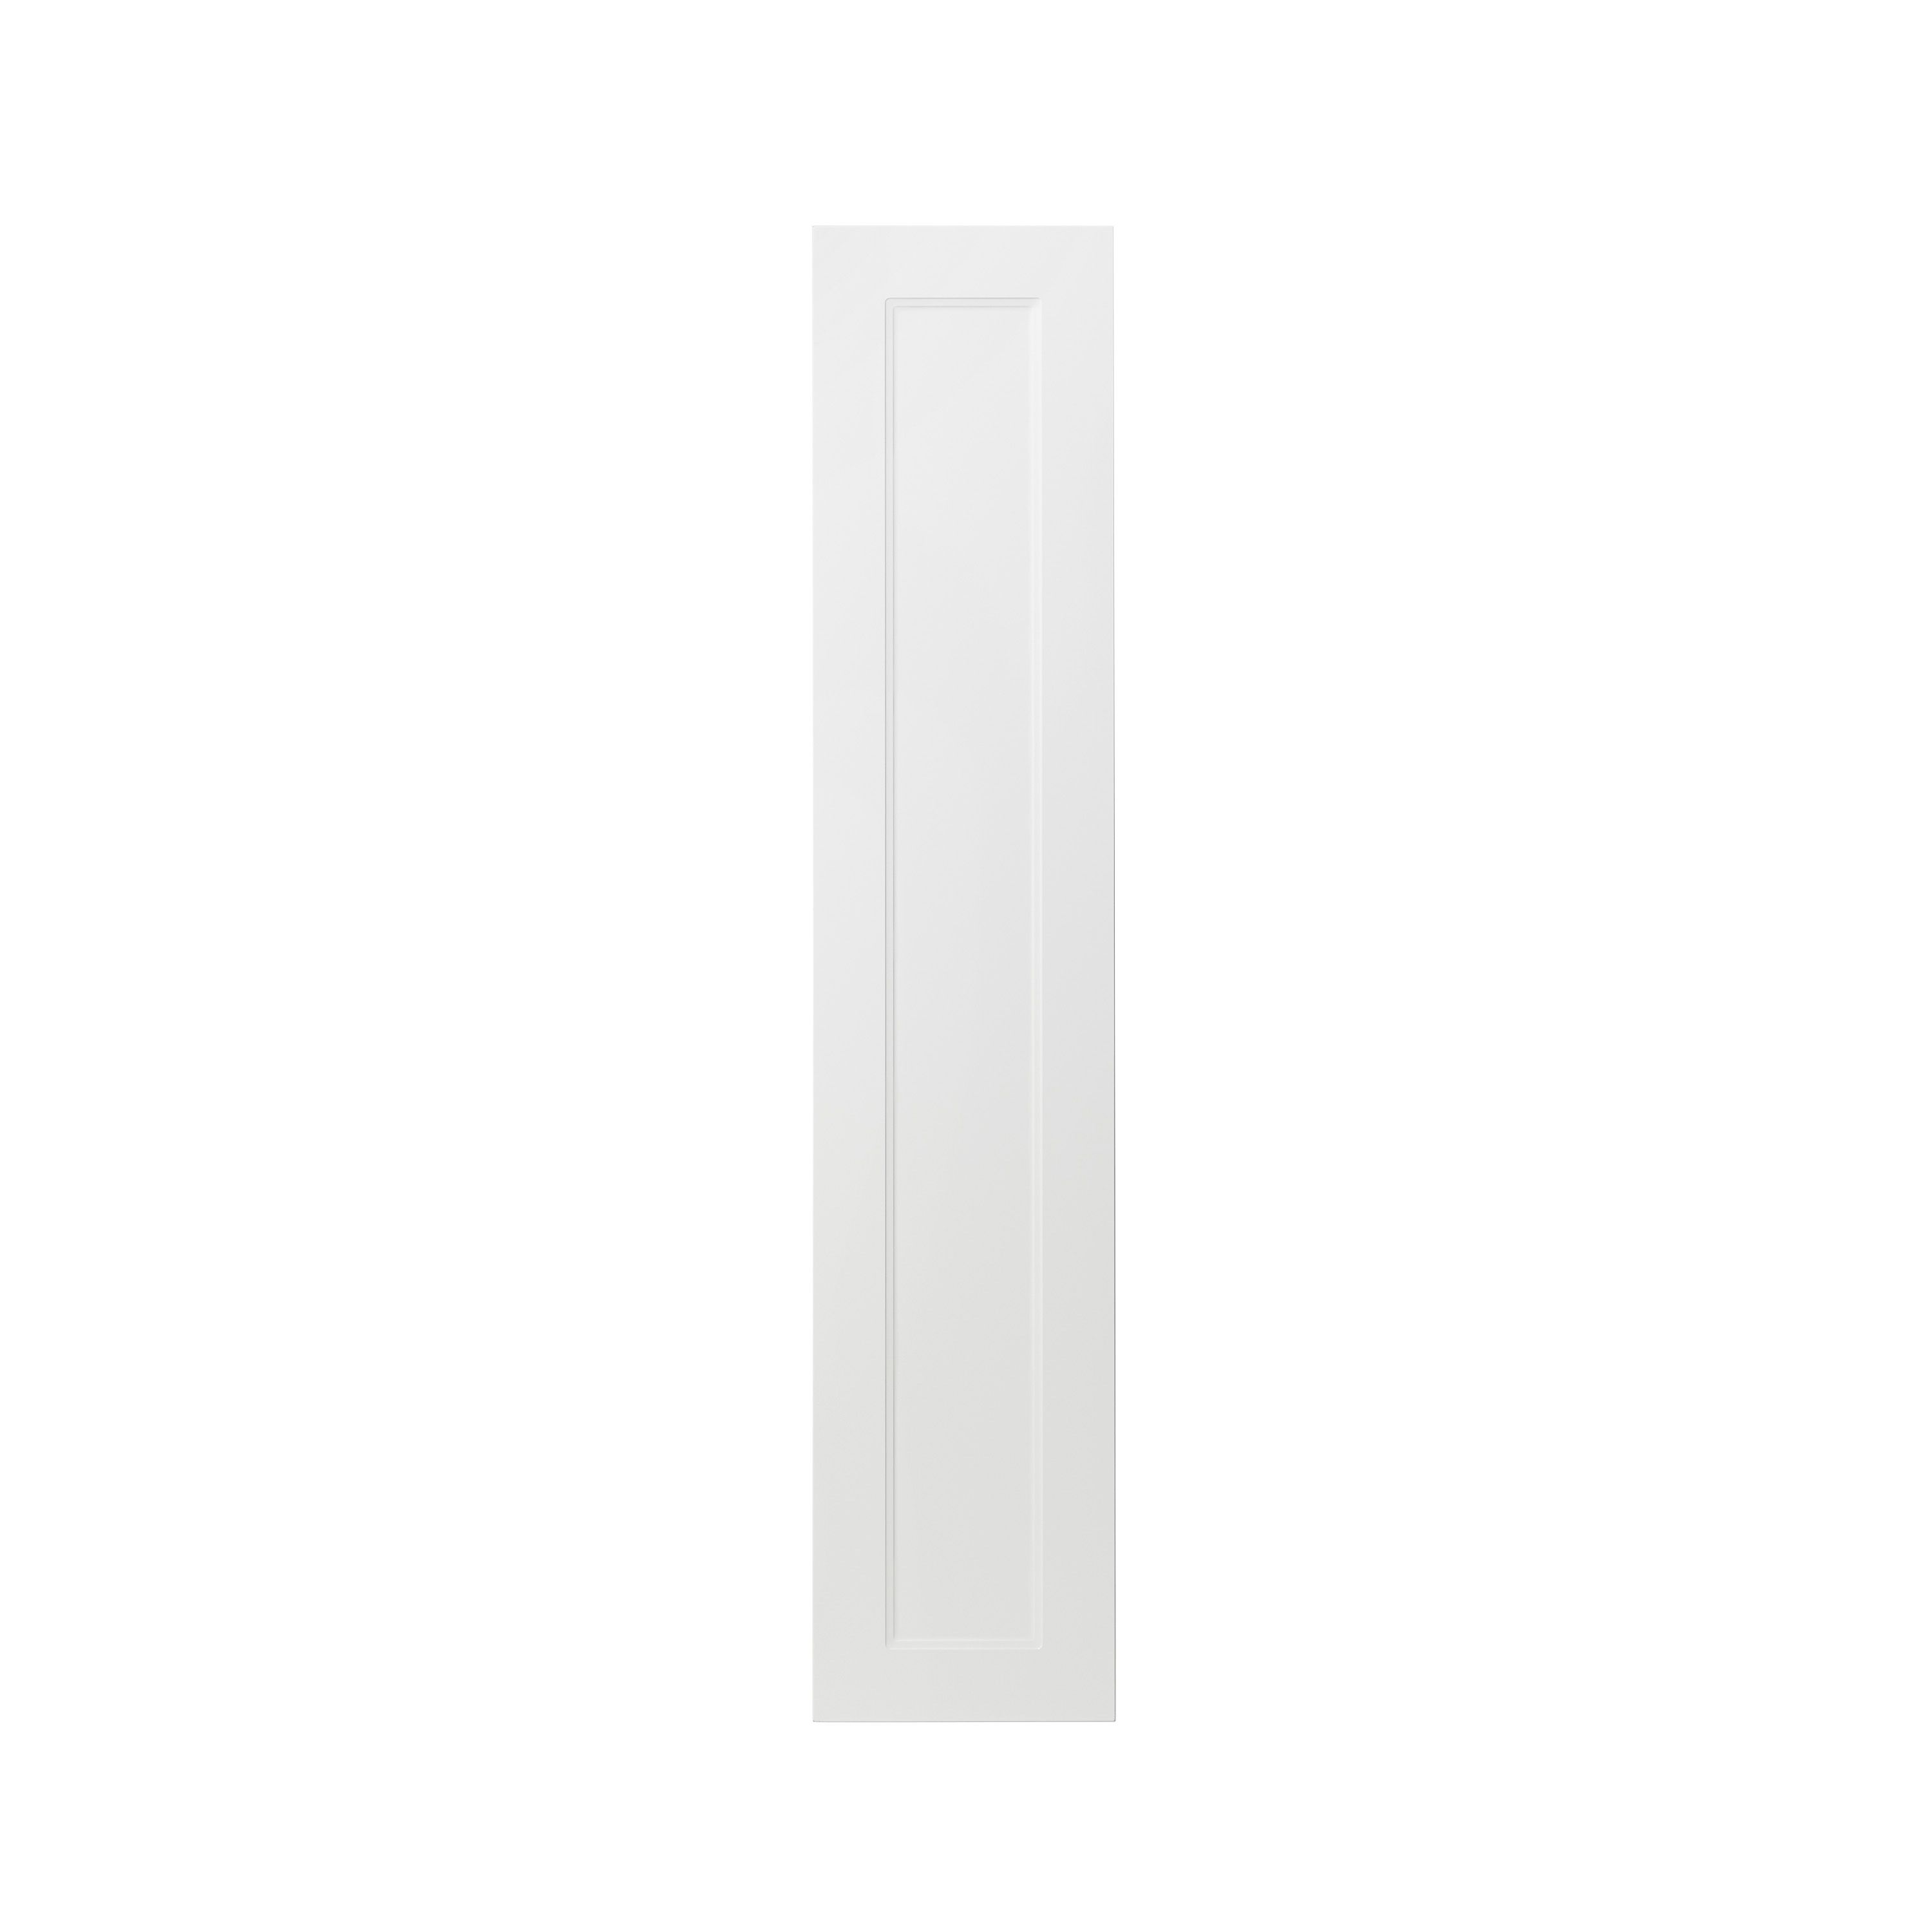 GoodHome Artemisia Matt white classic shaker Tall larder Cabinet door (W)300mm (H)1467mm (T)18mm